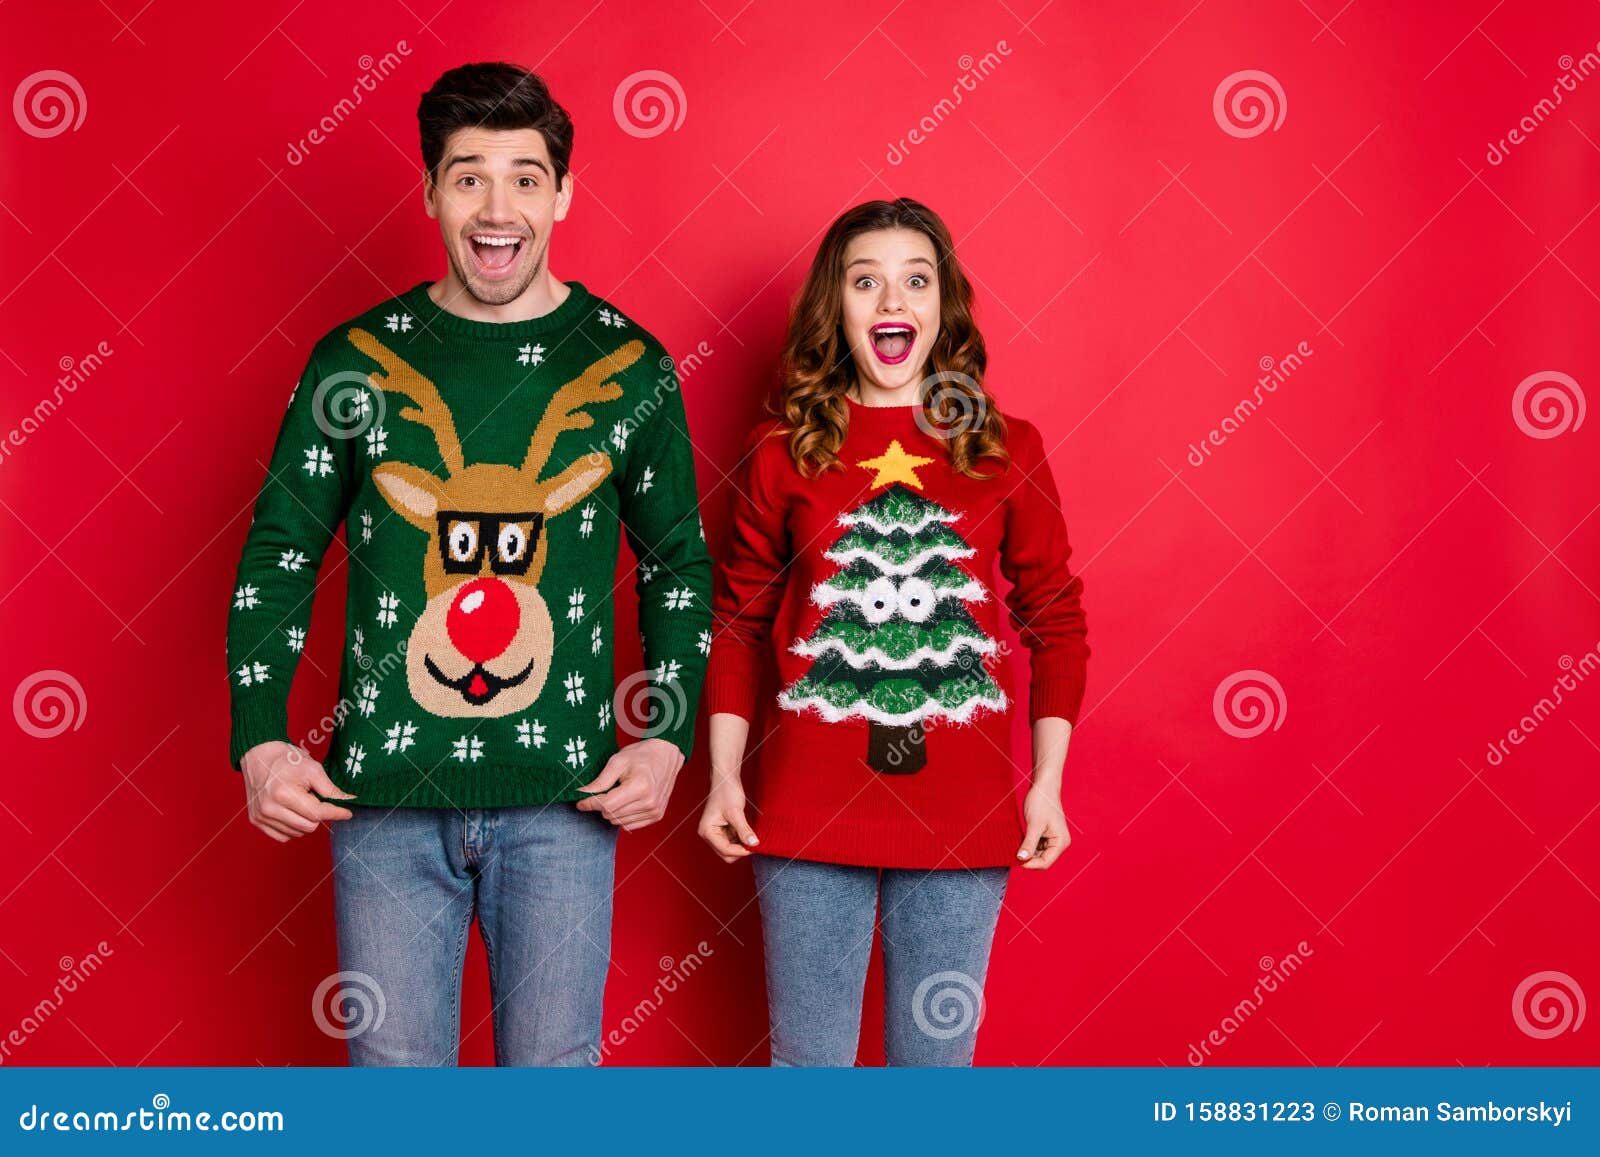 portrait of astonished two people wife with brunette hair scream wow enjoy deer christmas pattern fashion jumper wear